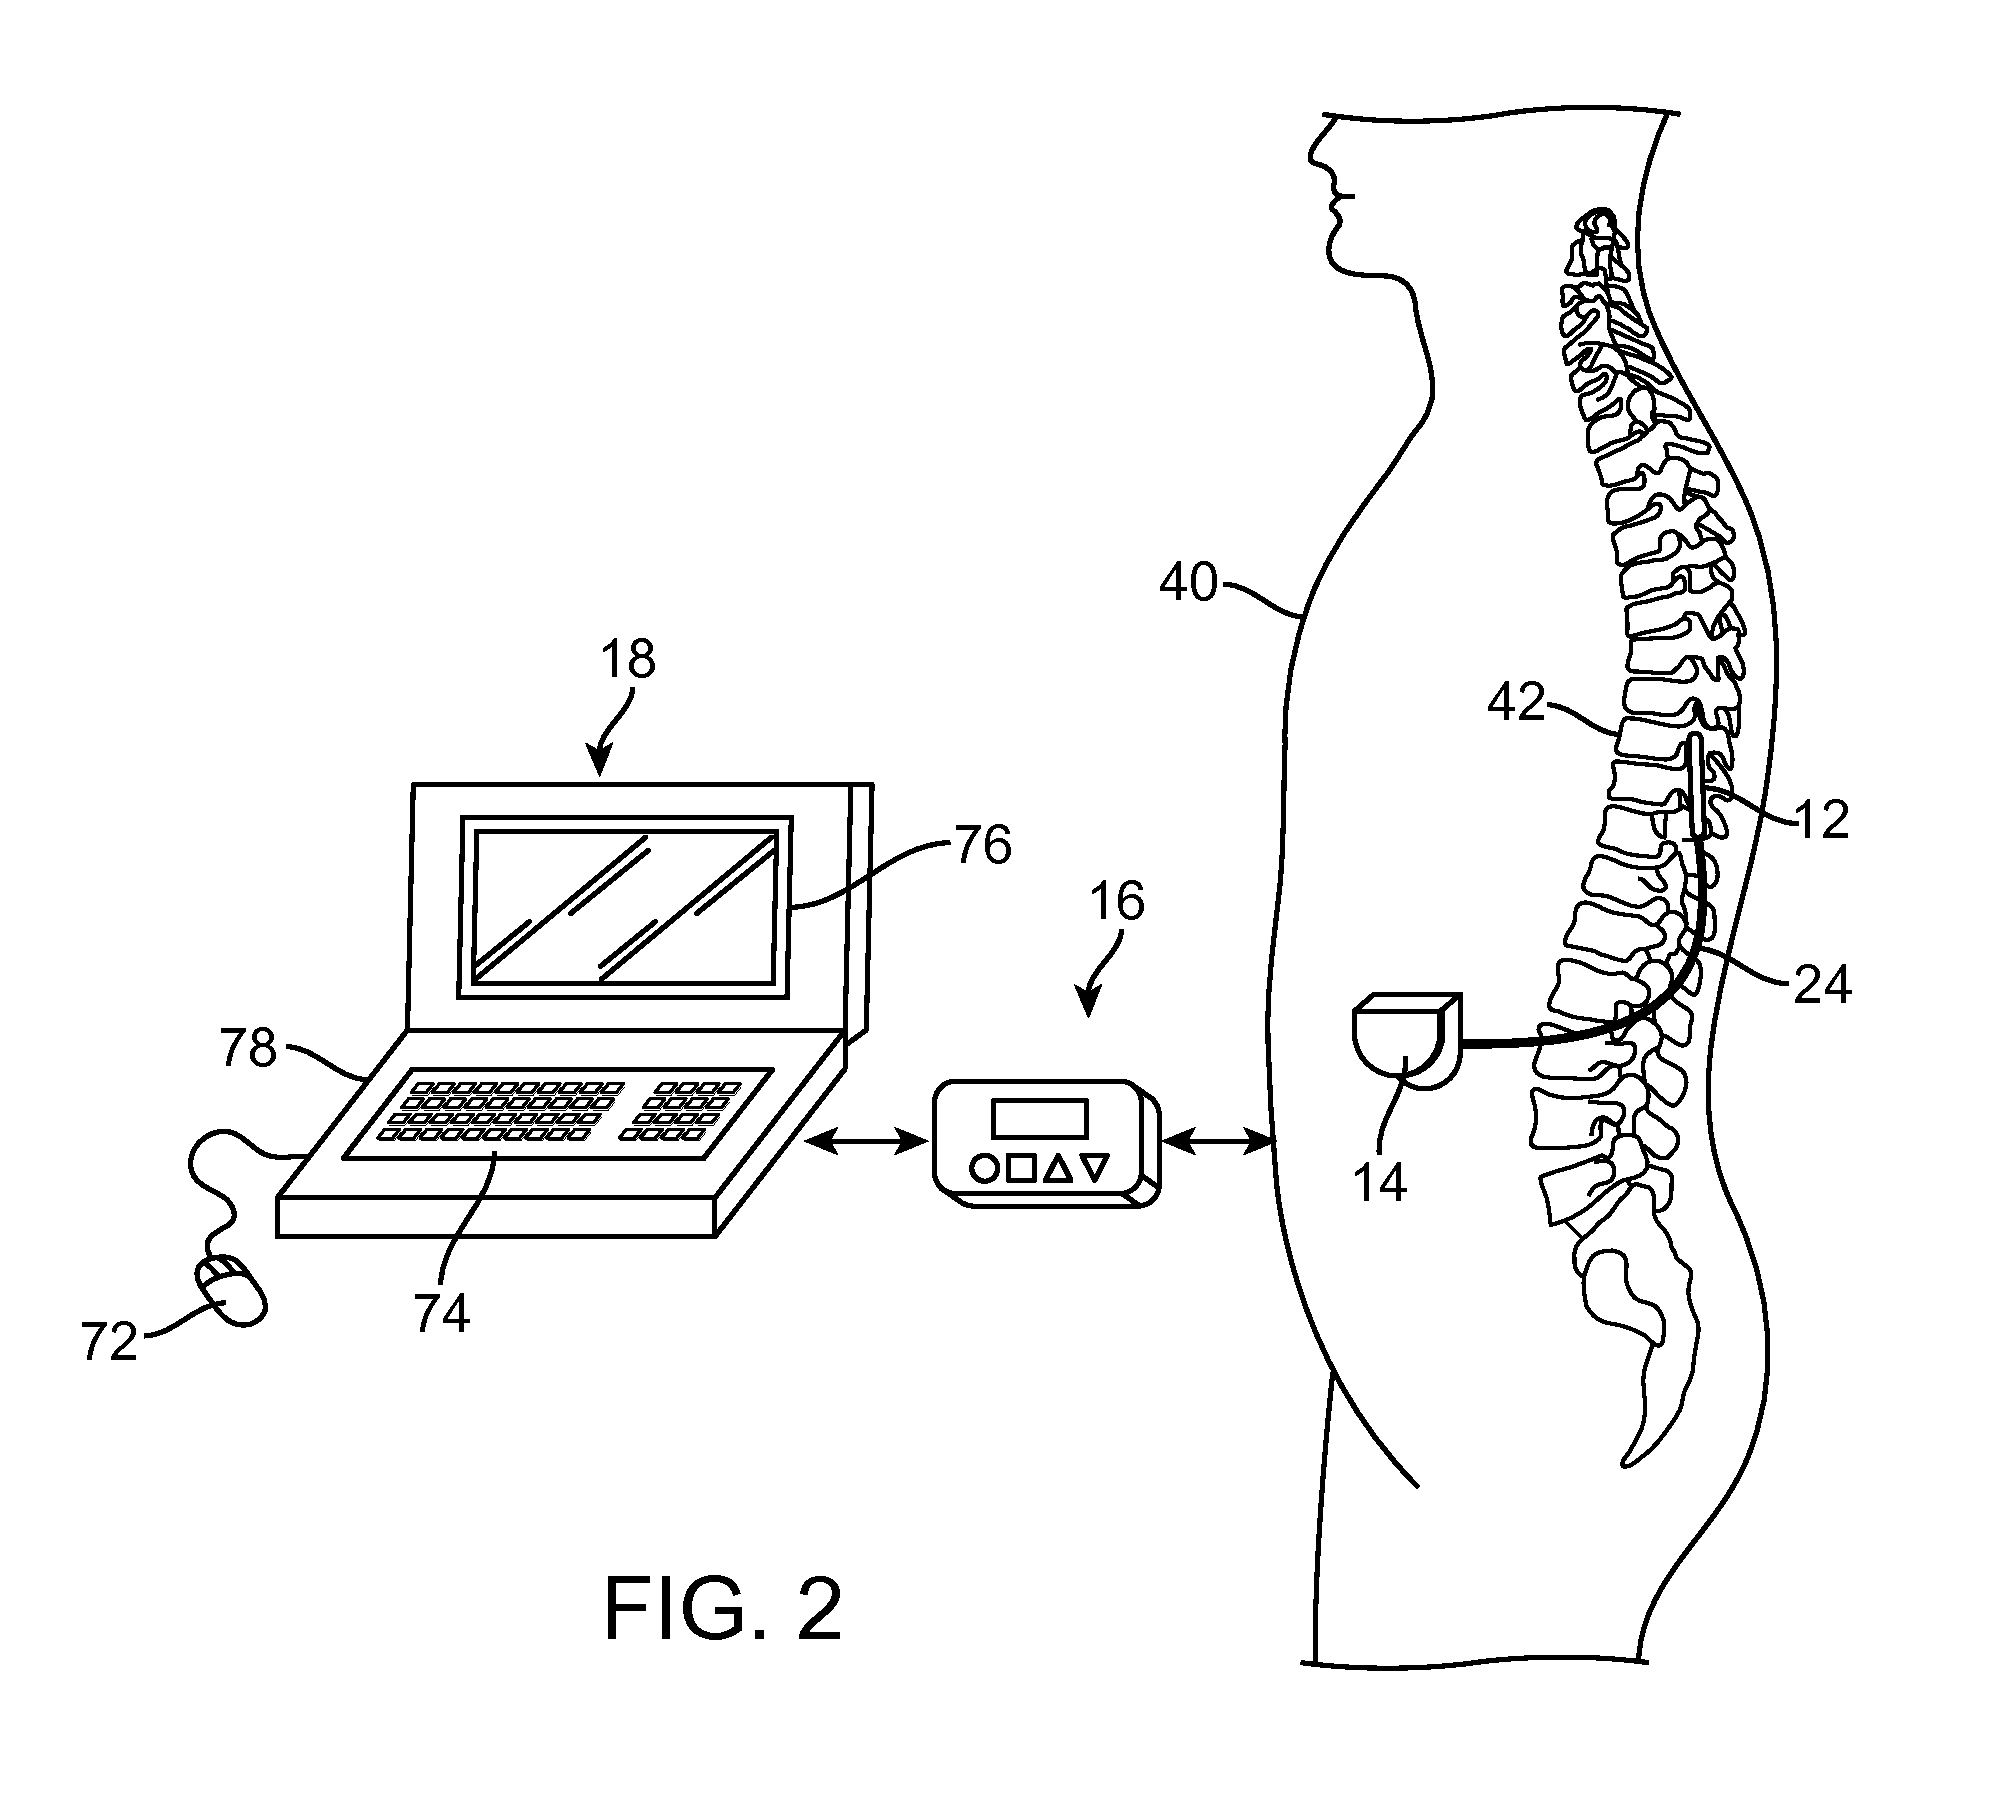 Technique for linking electrodes together during programming of neurostimulation system